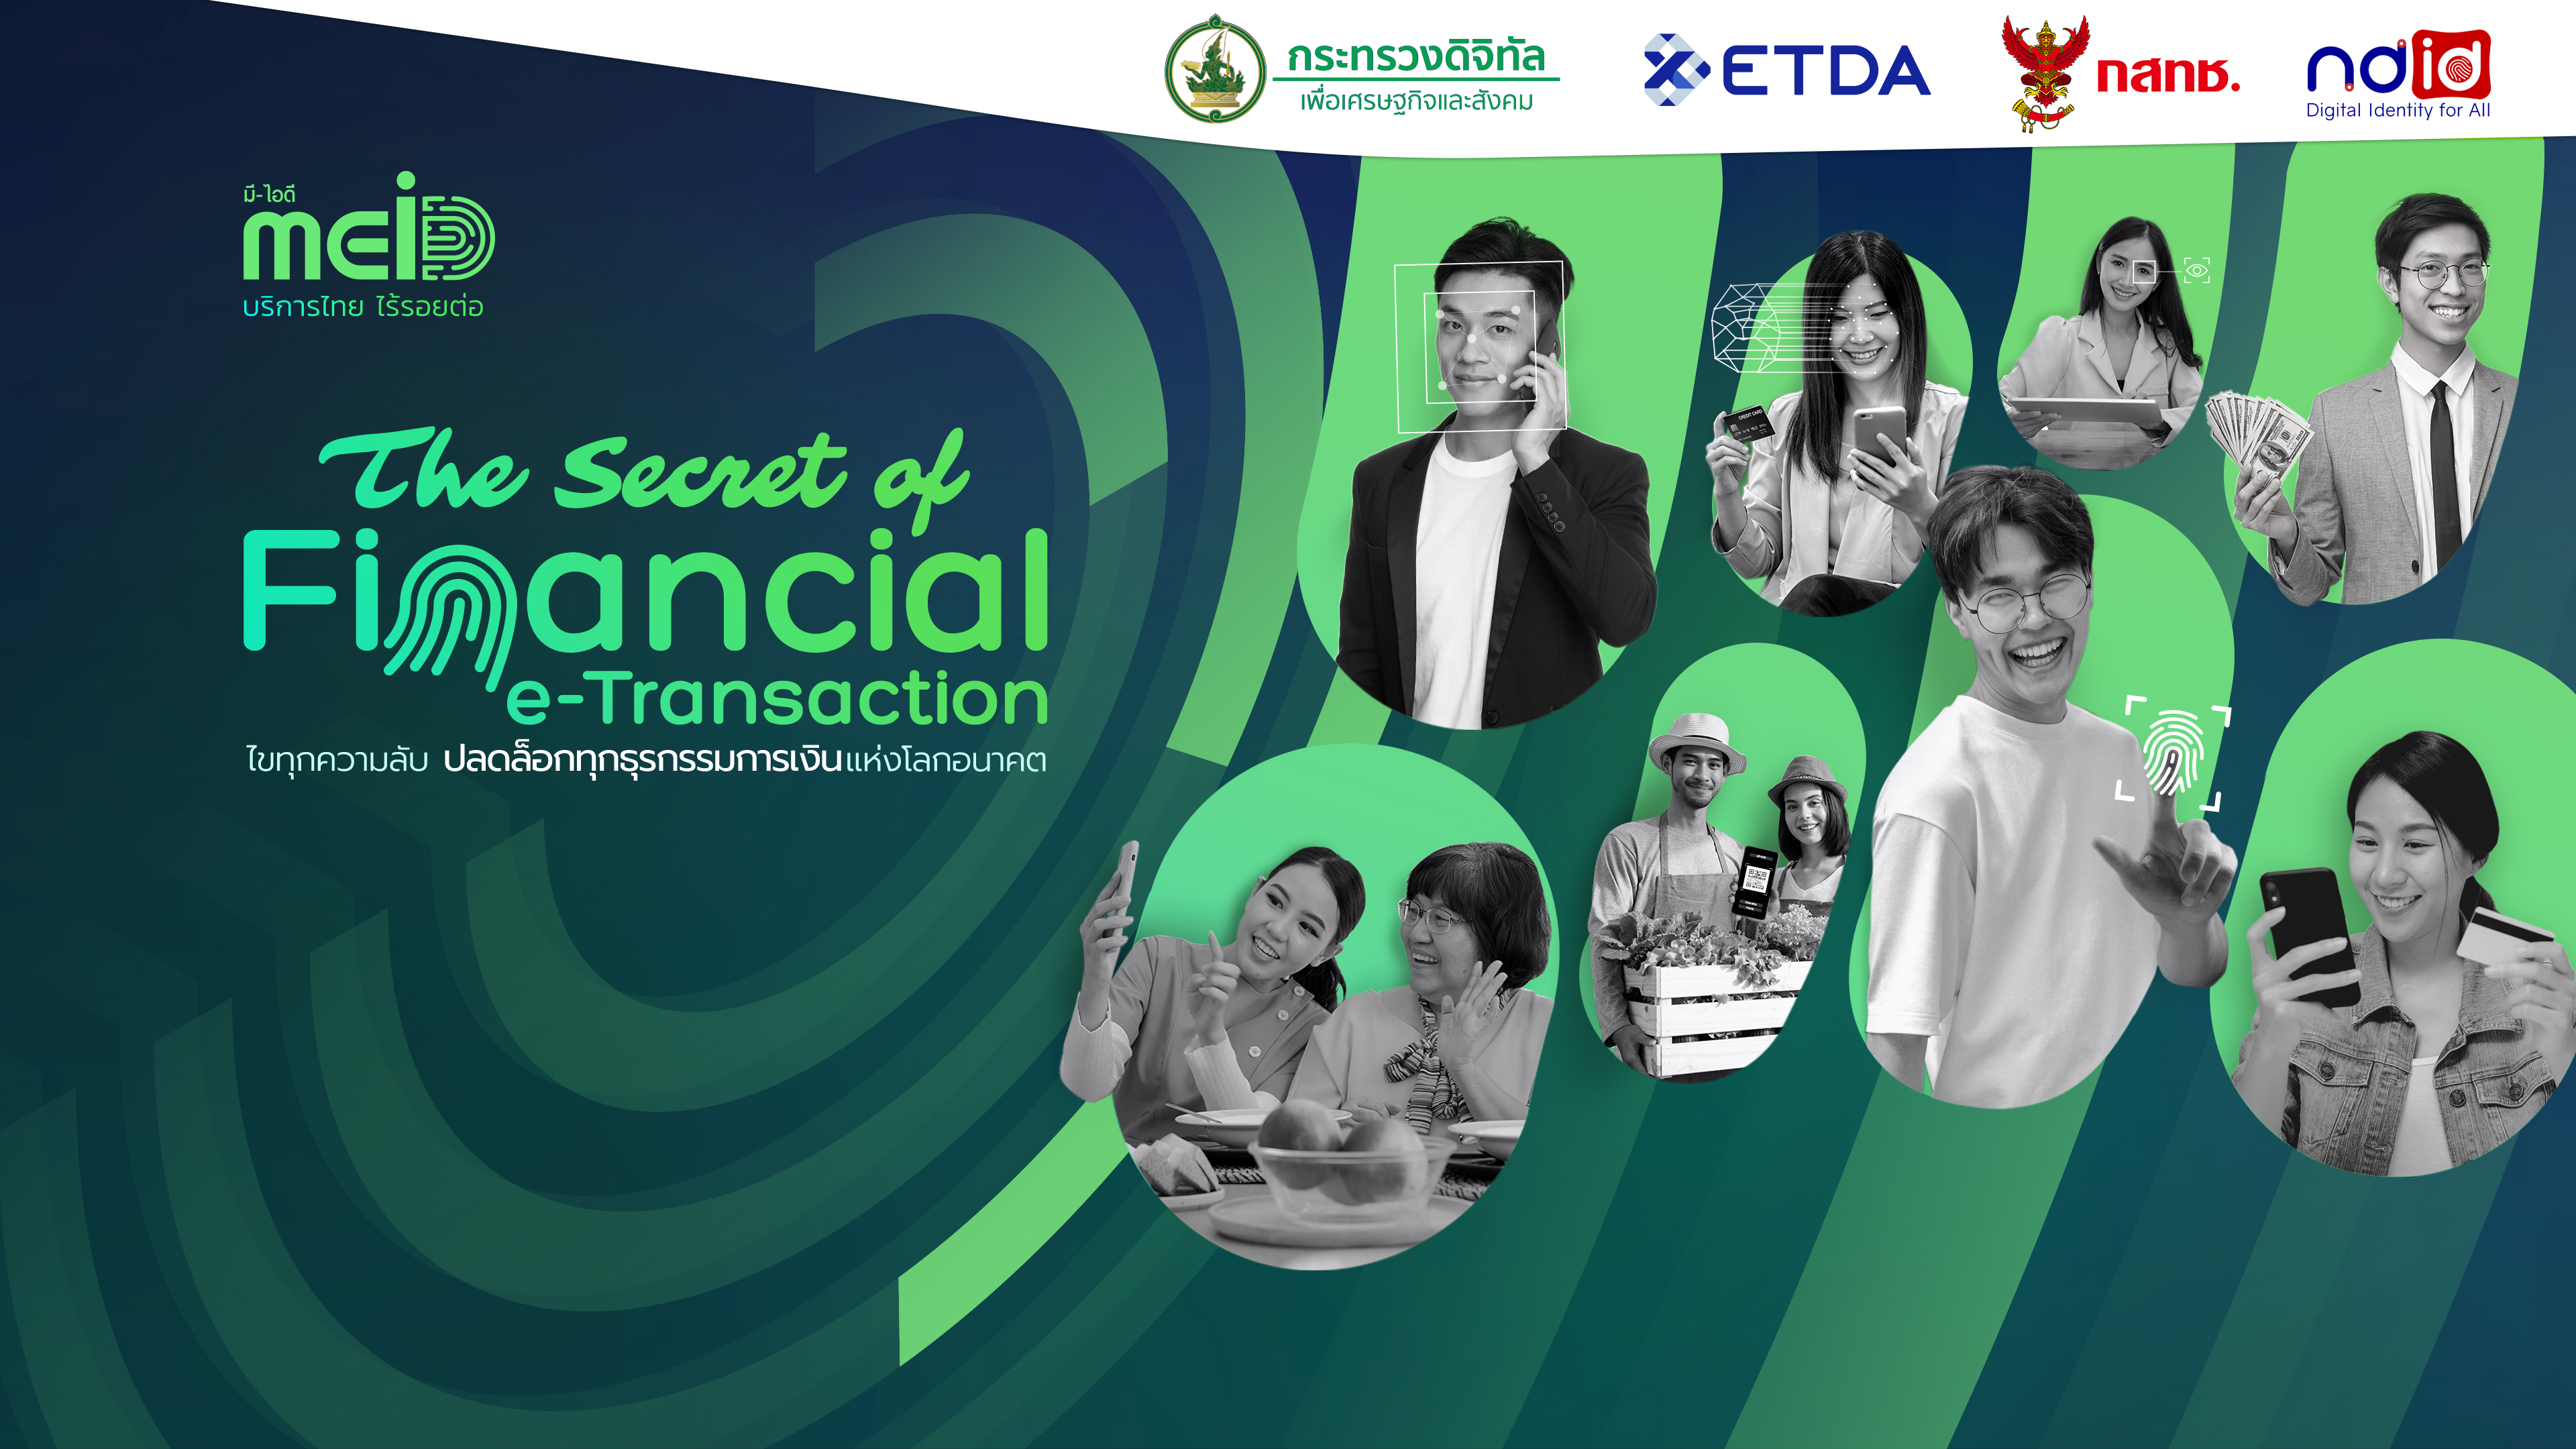 ETDA ชวน กสทช.- NDID สานต่อแคมเปญ MEiD จัดงาน The Secret of Financial e-Transaction ปลดล็อกการเงิน รับโลกอนาคต ด้วย Digital ID